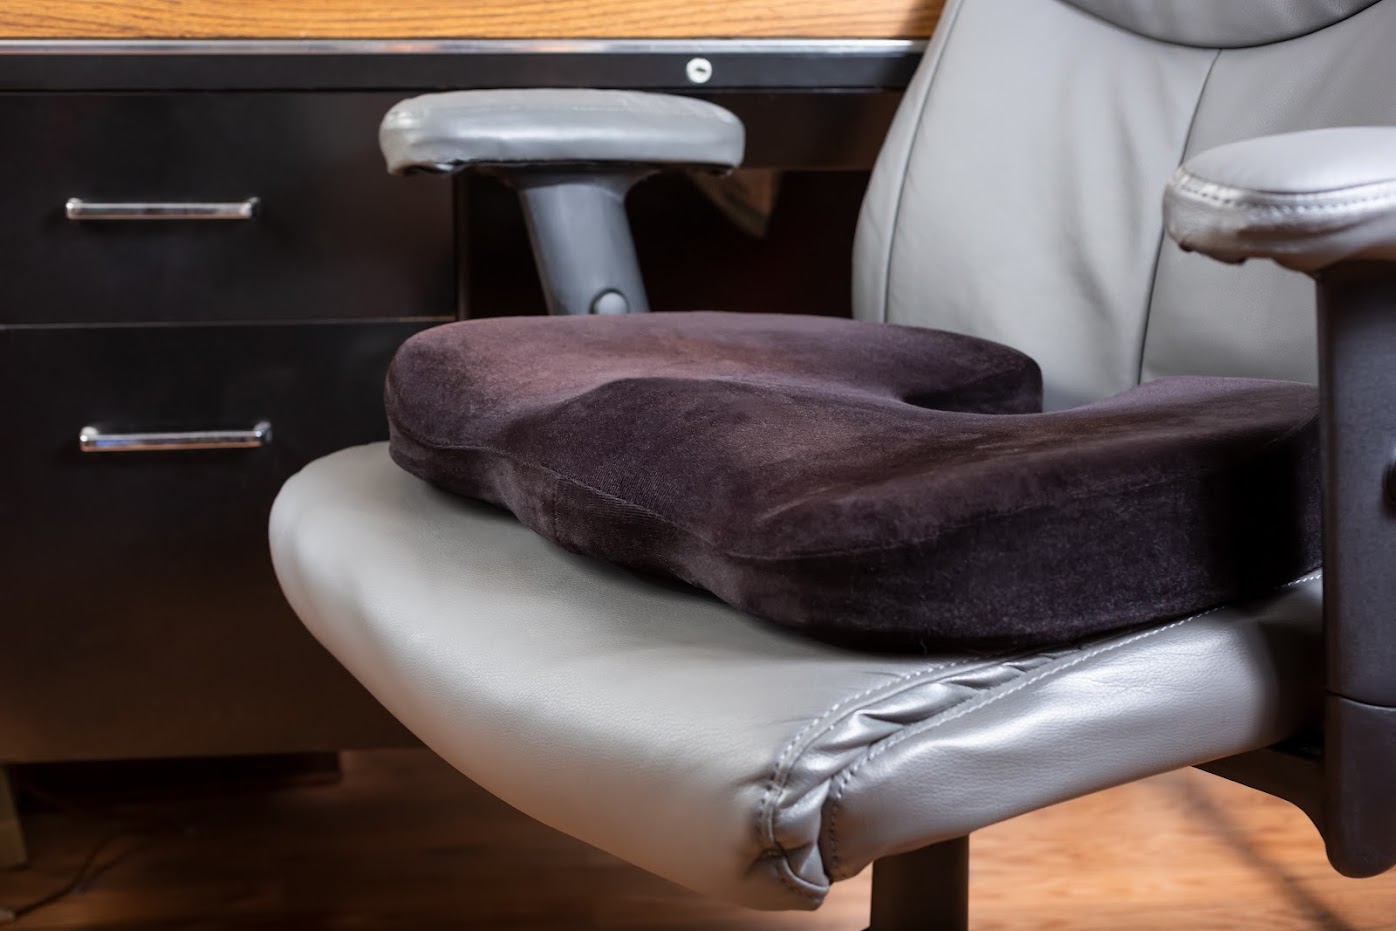 A seat cushion on an office chair